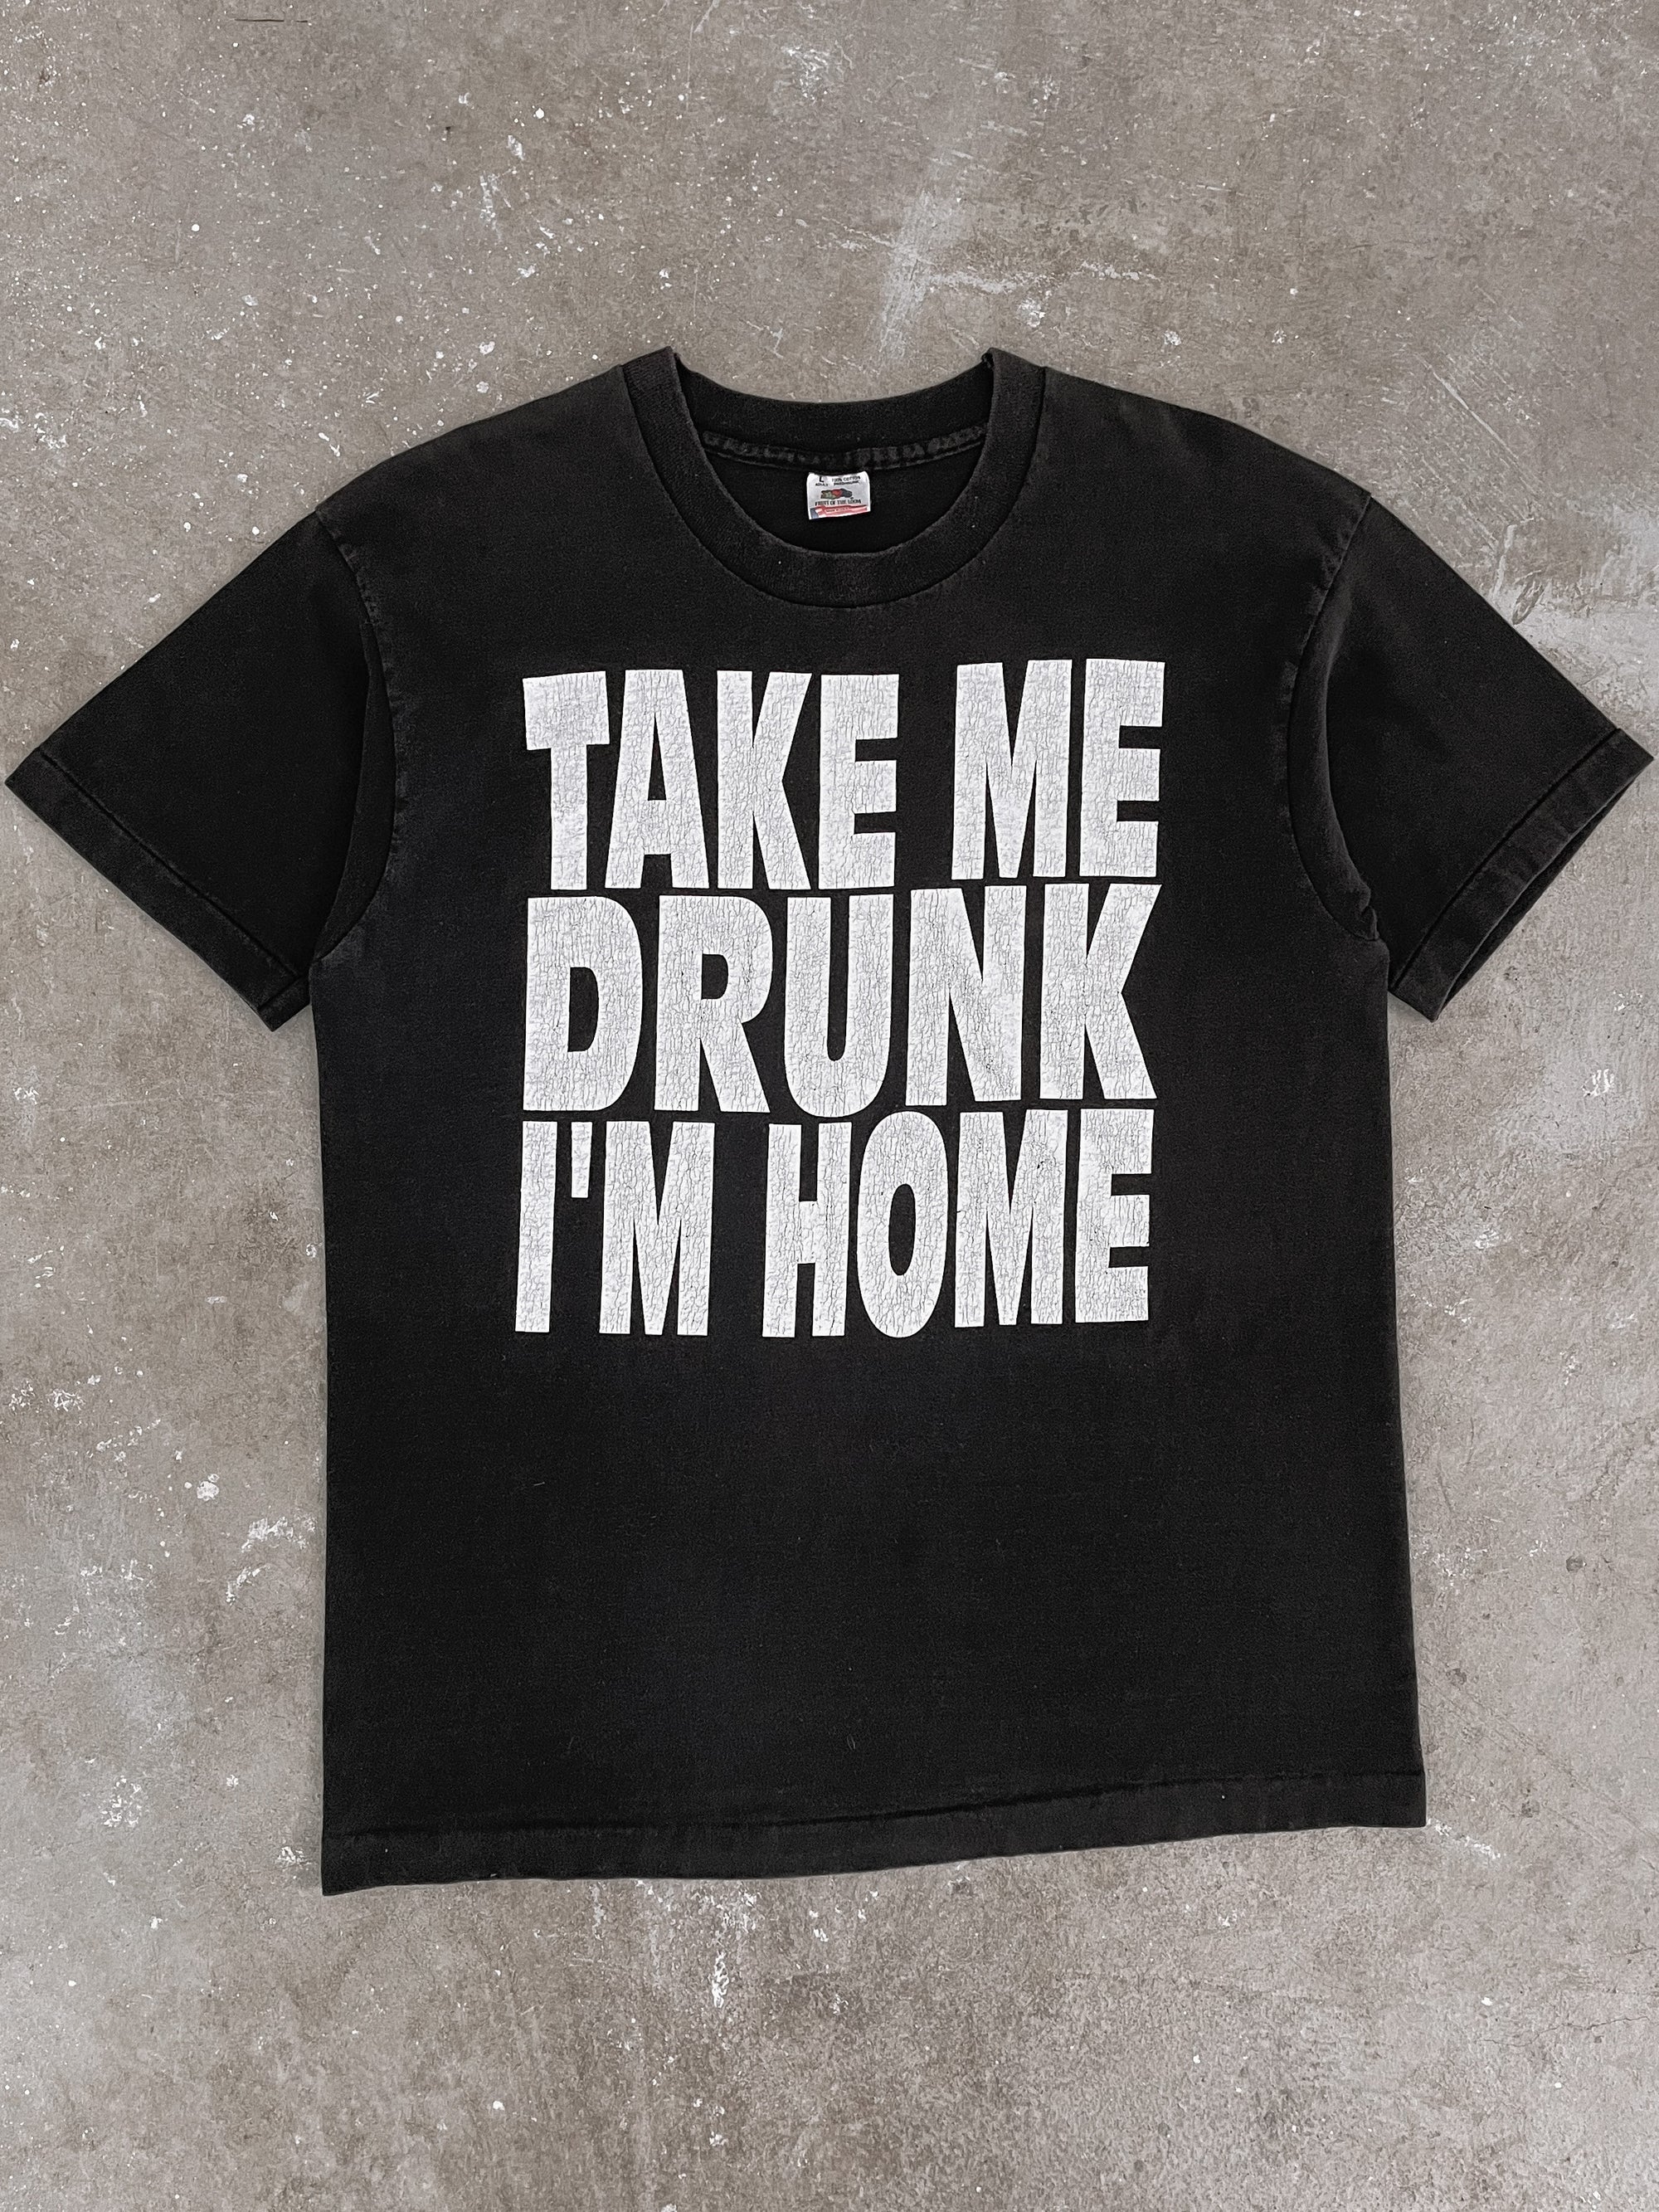 1990s “Take Me Drunk I’m Home” Single Stitched Tee (L)